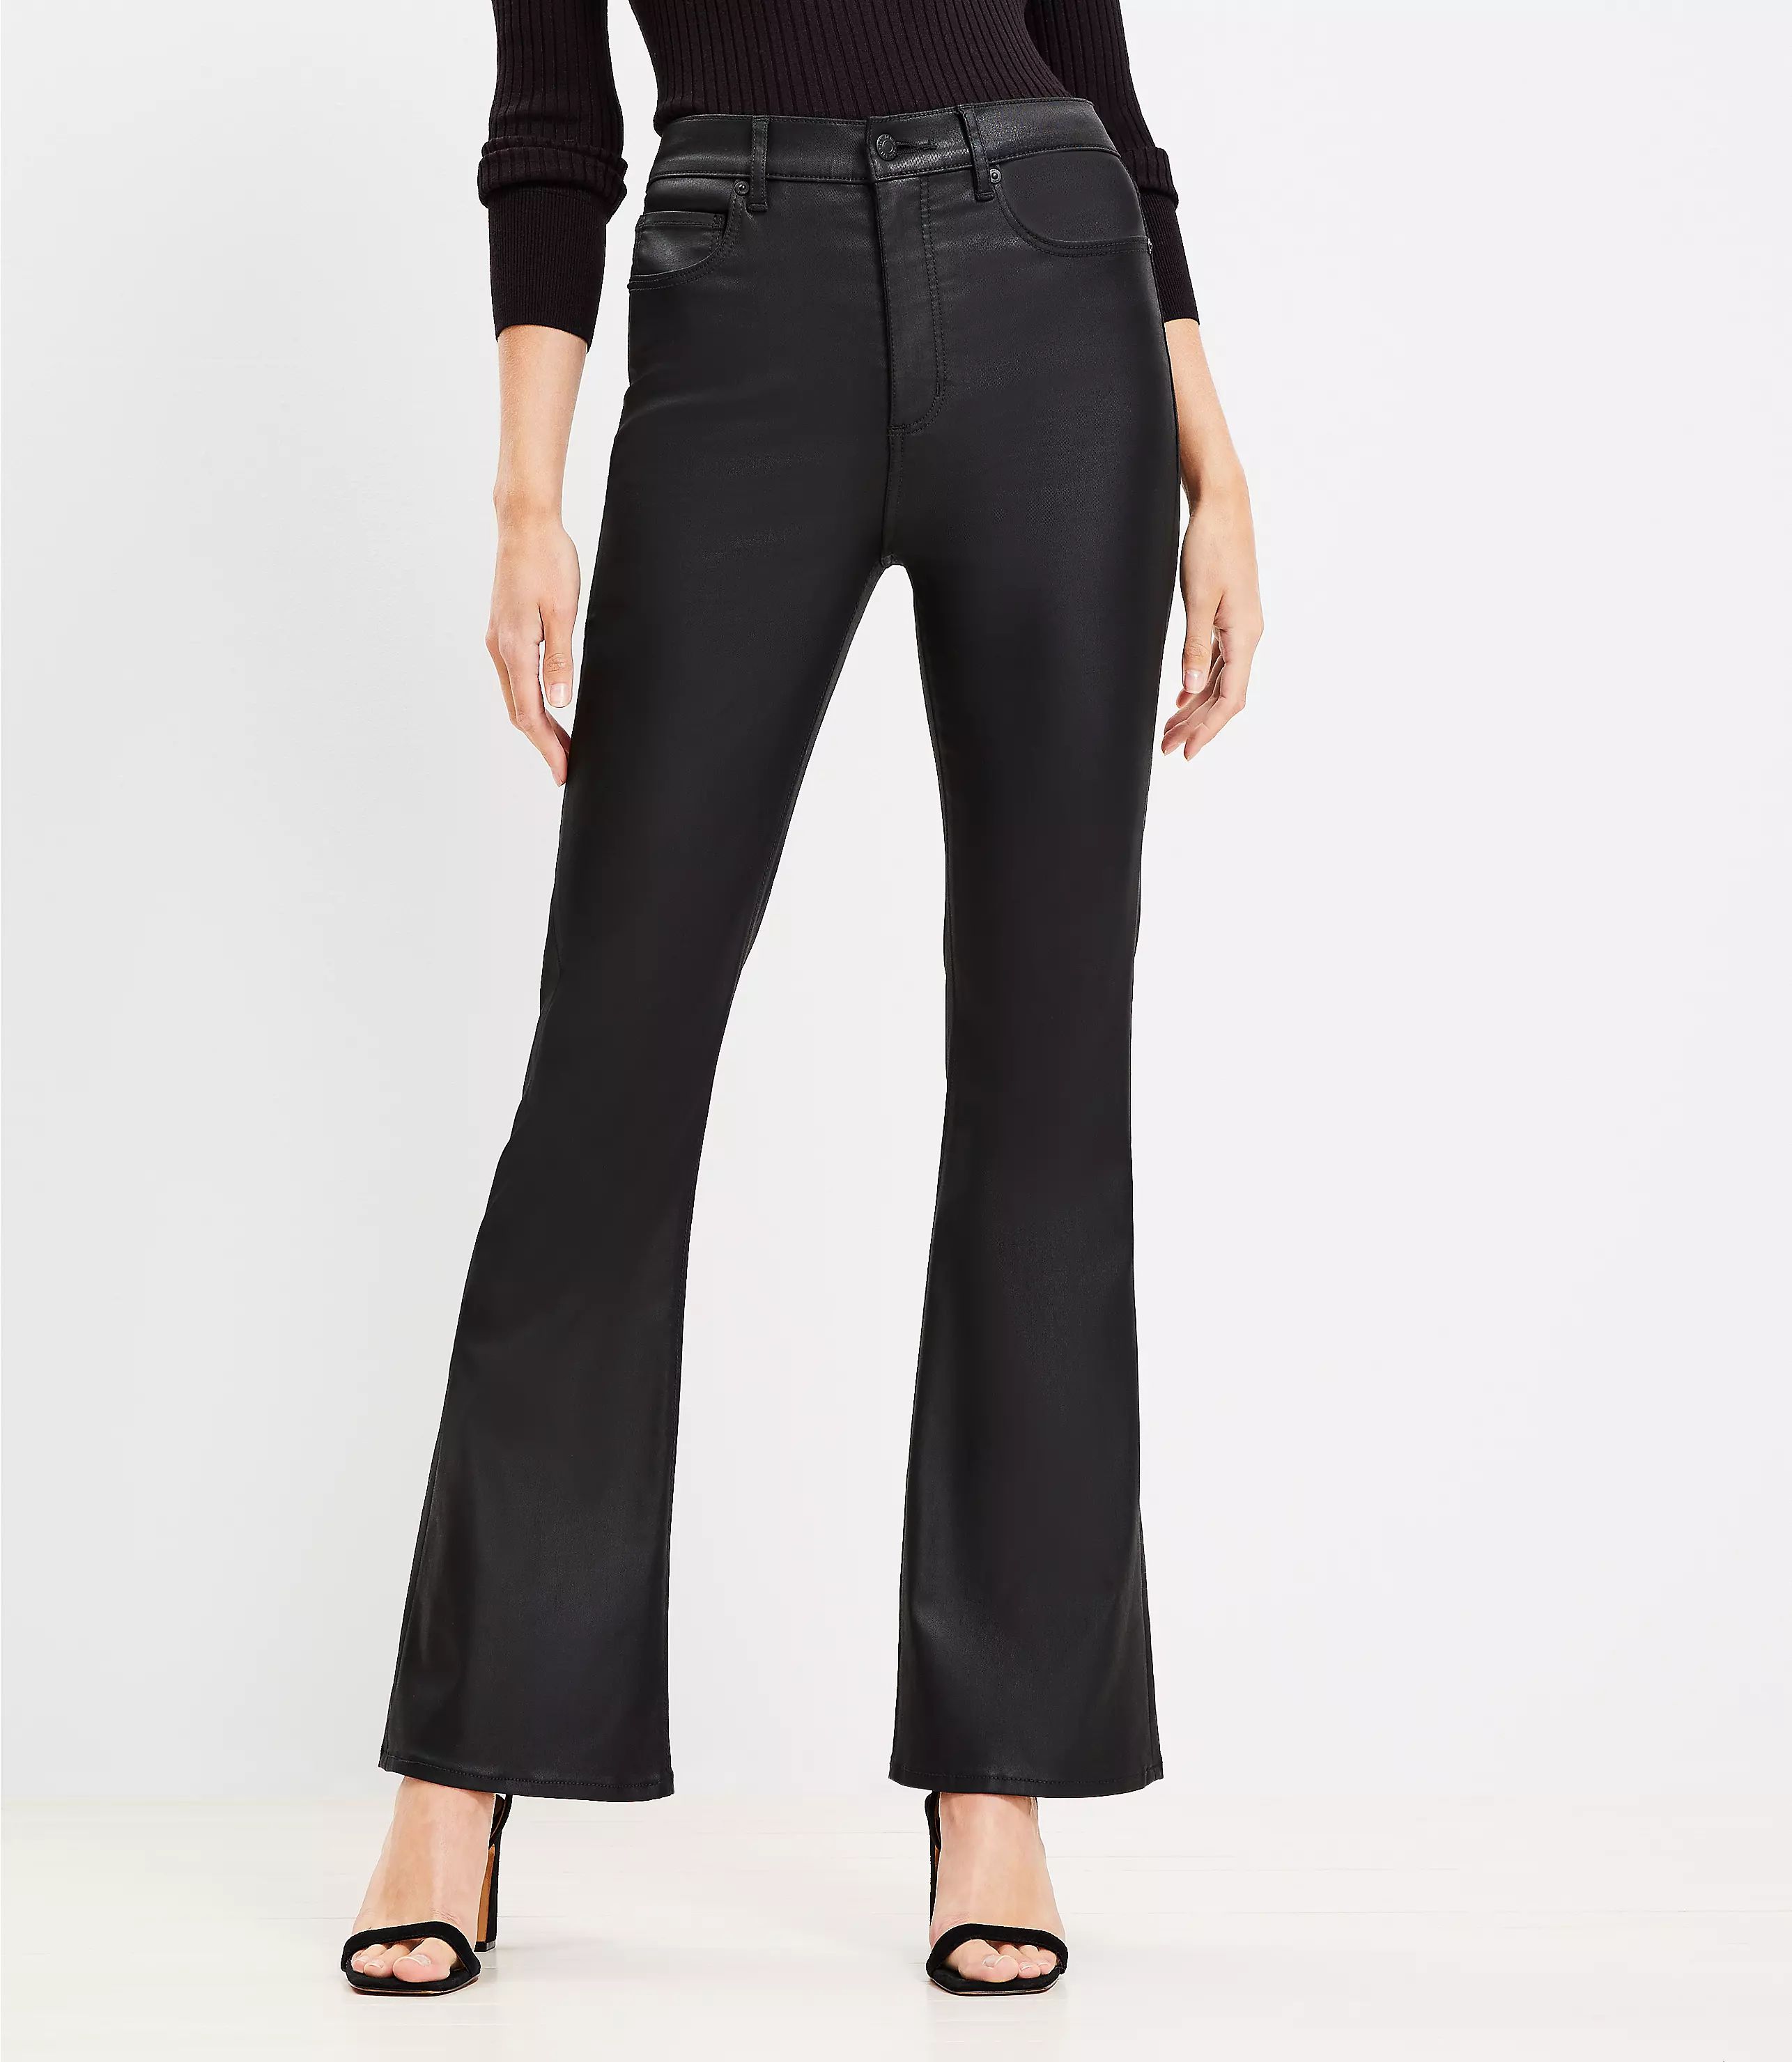 Petite Coated High Rise Slim Flare Jeans in Black | LOFT